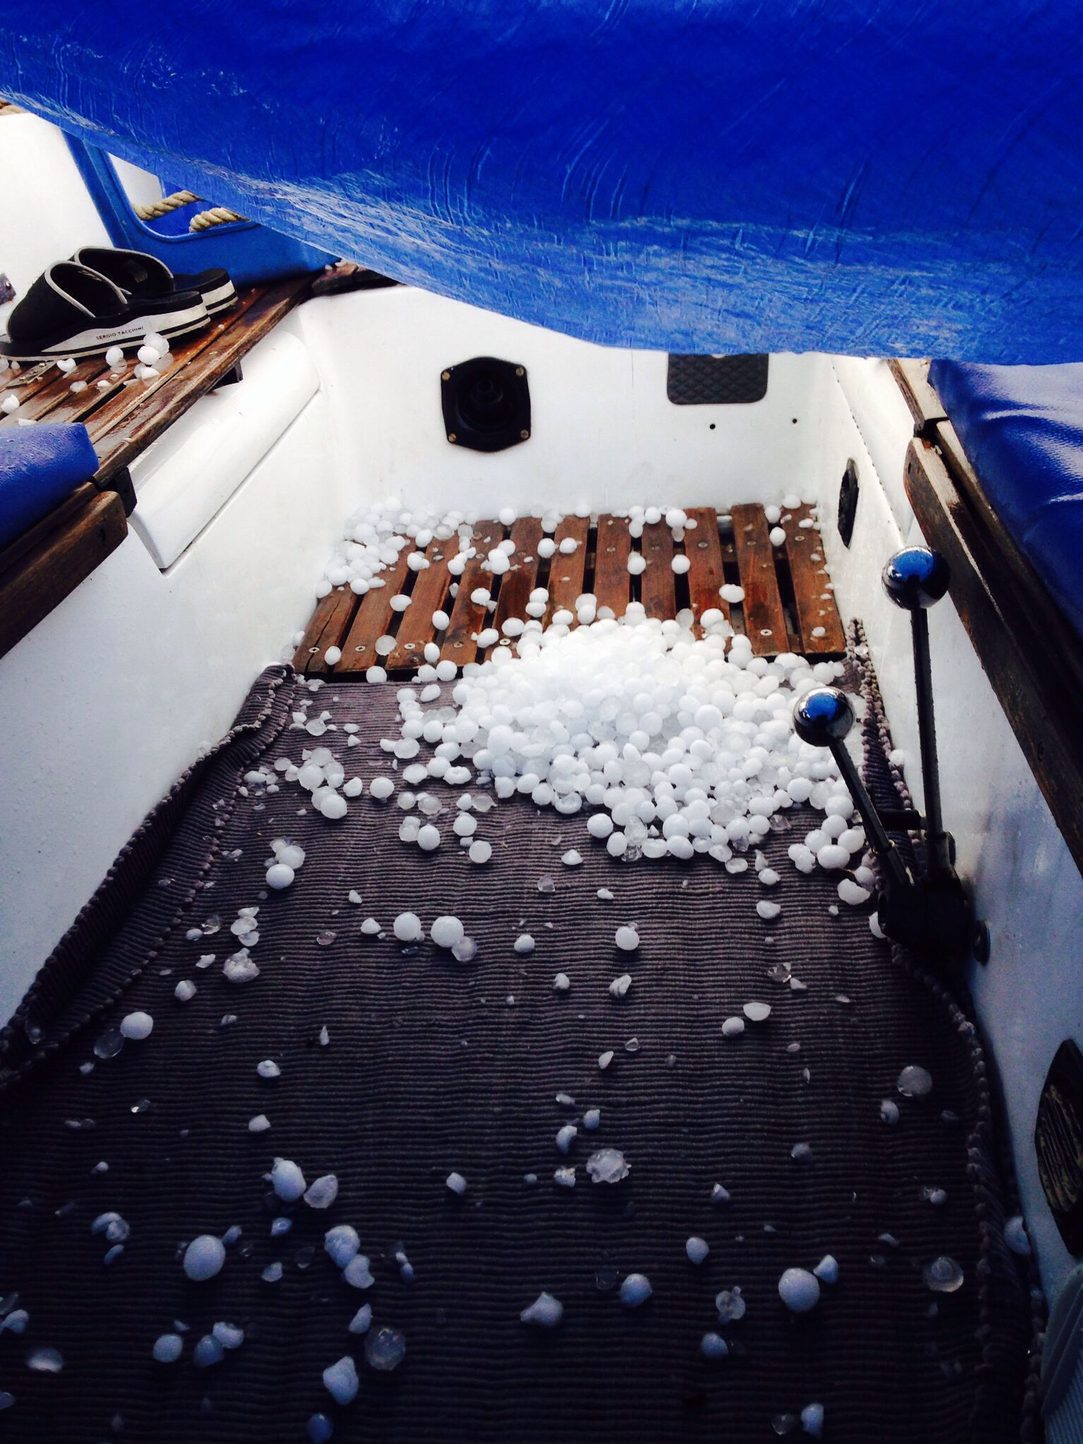 Freezing rain today on a sailing boat in Krk, Croatia - meme